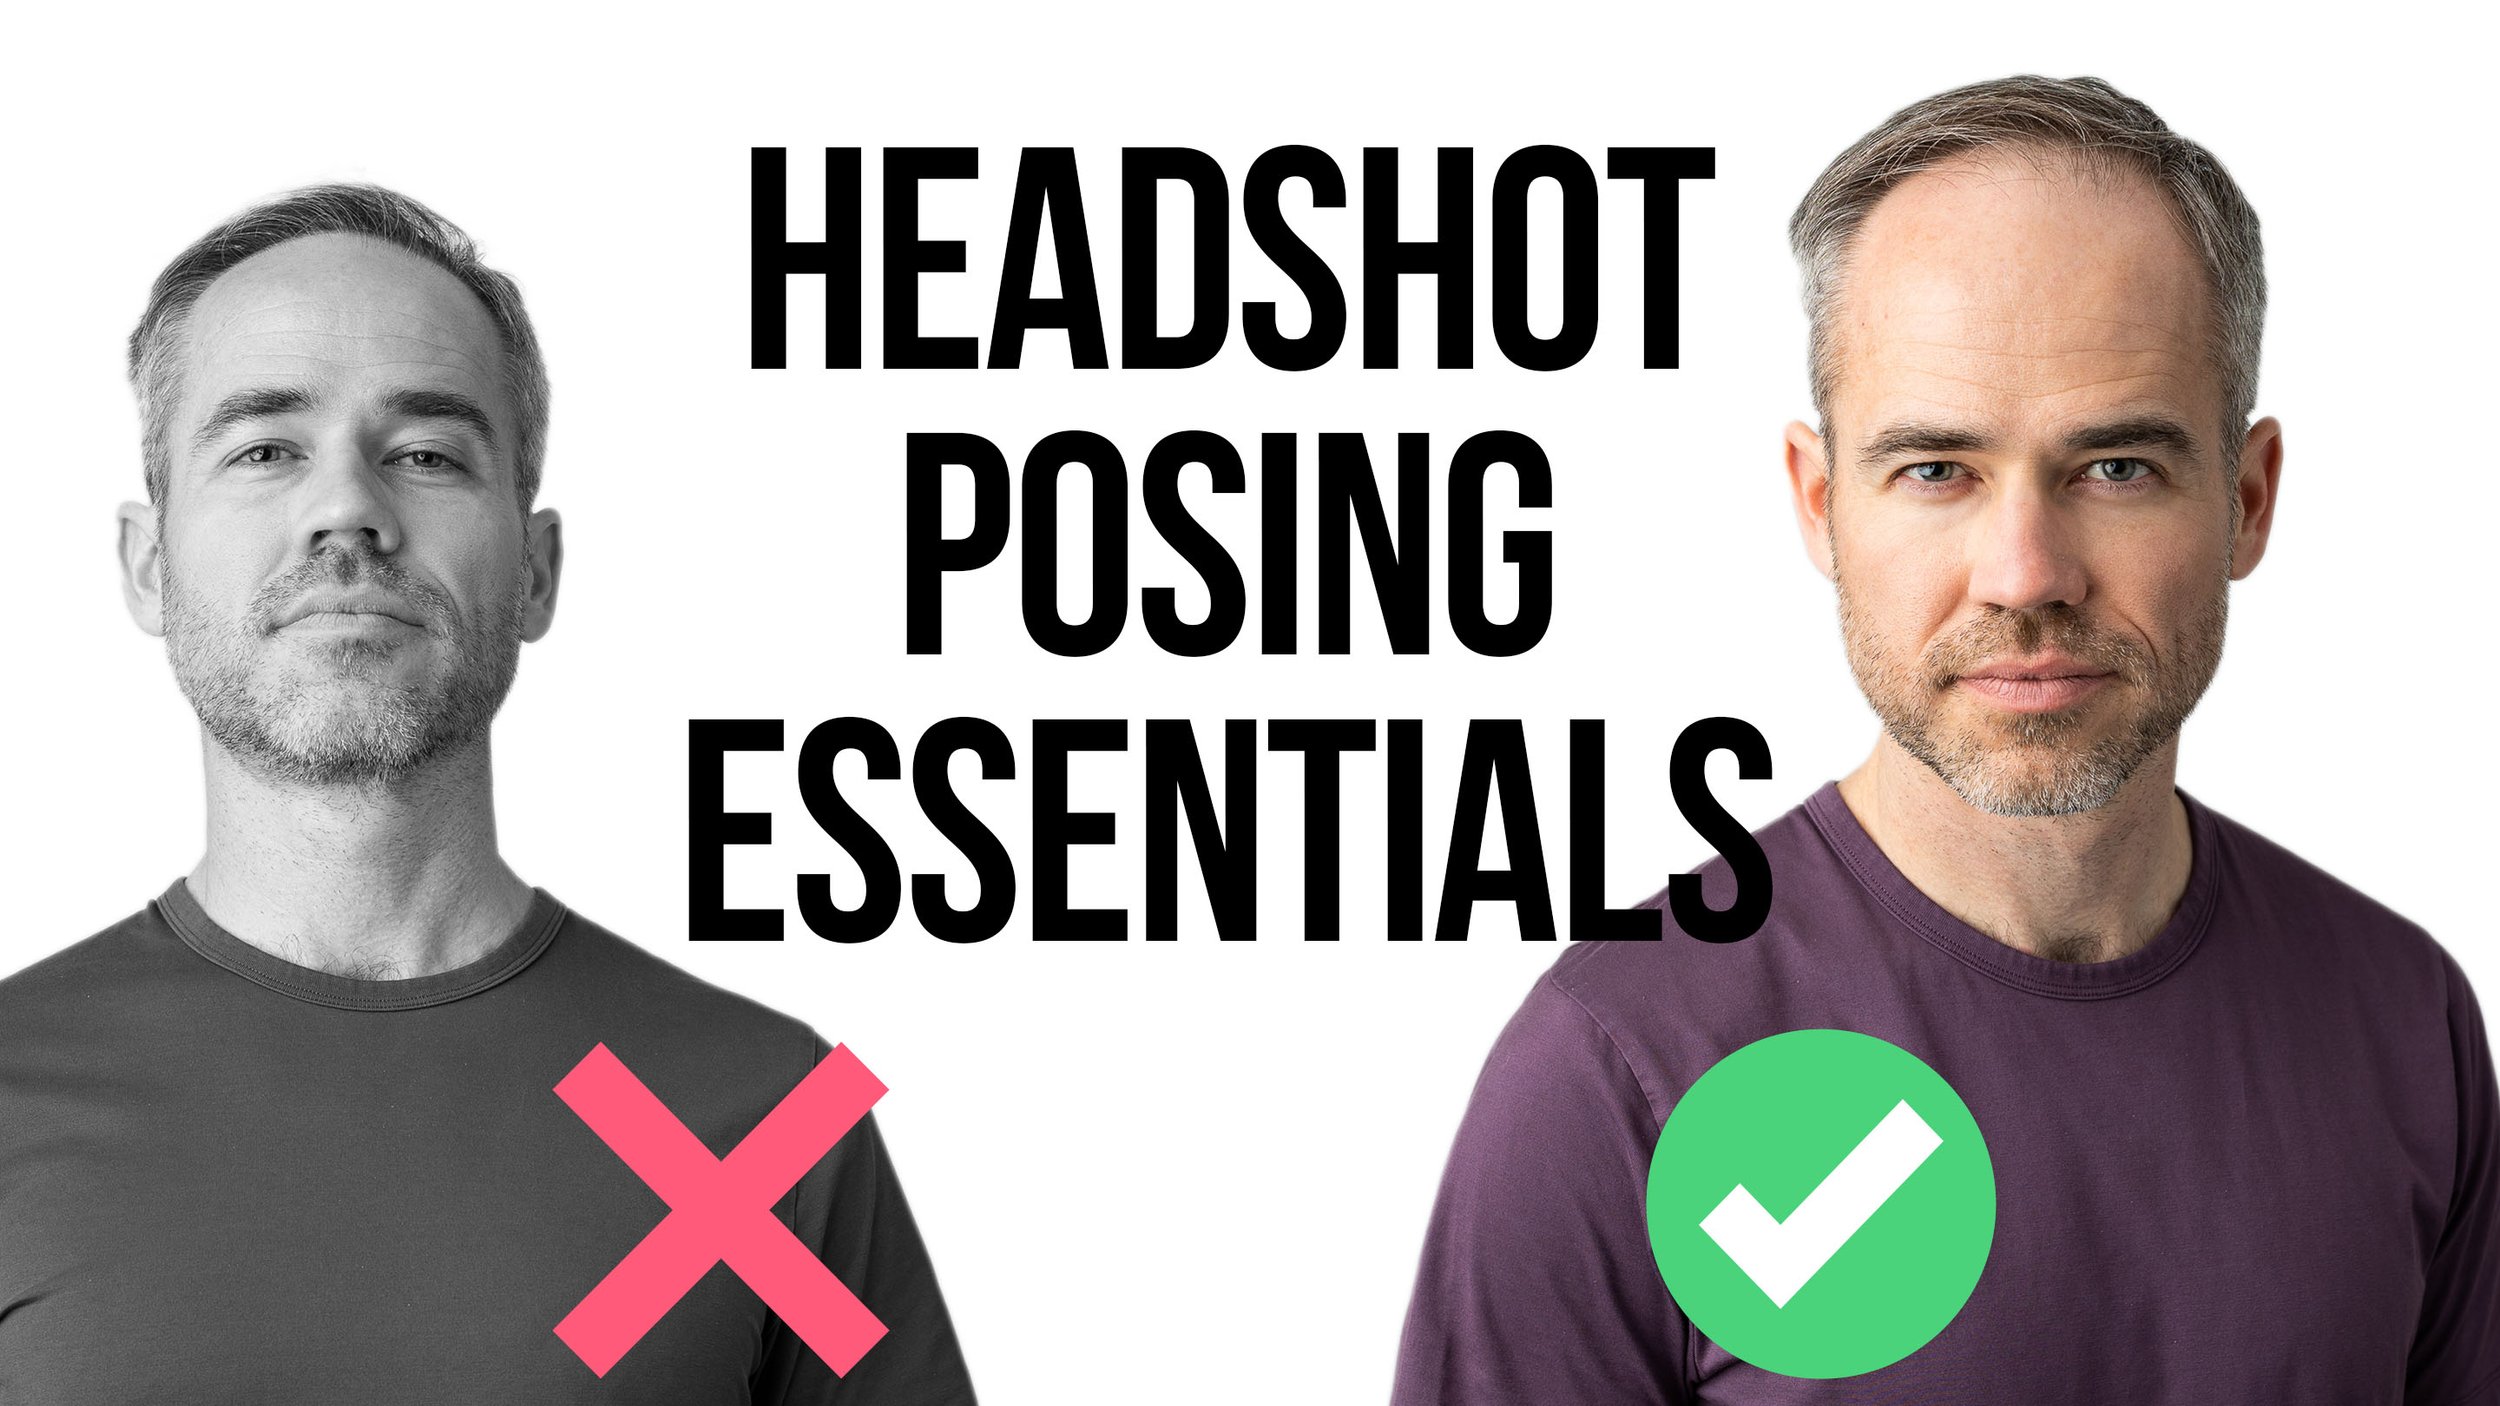 Headshot+posing+essentials